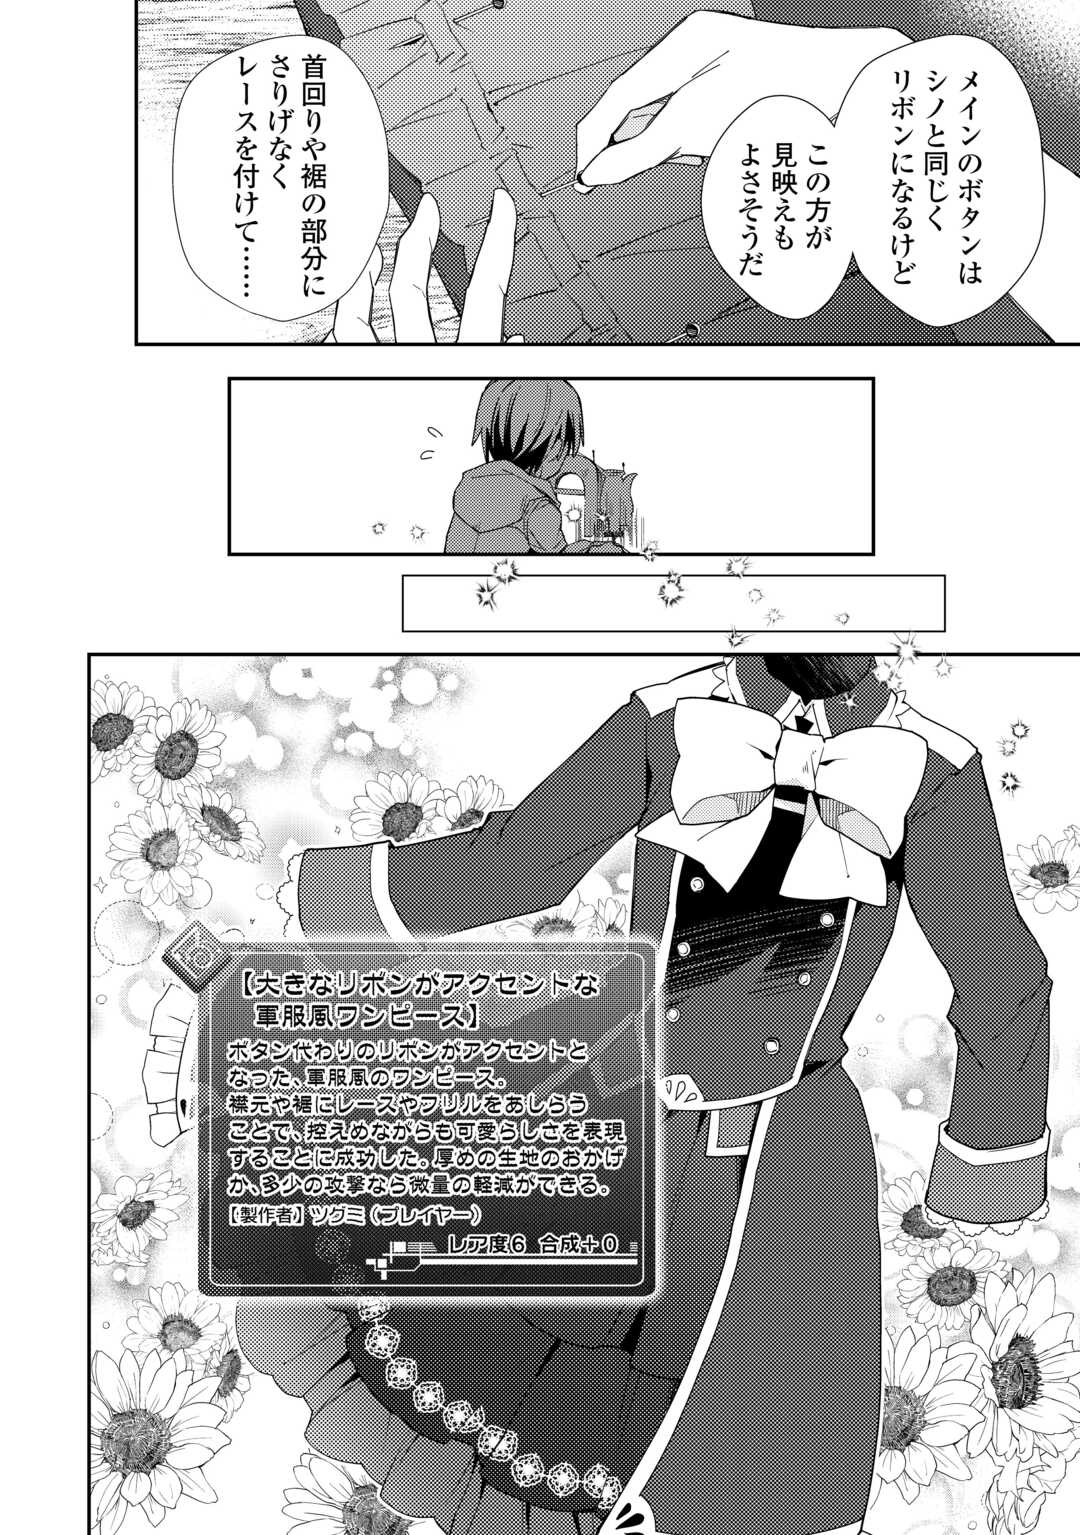 Nonbiri VRMMOki - Chapter 89 - Page 10